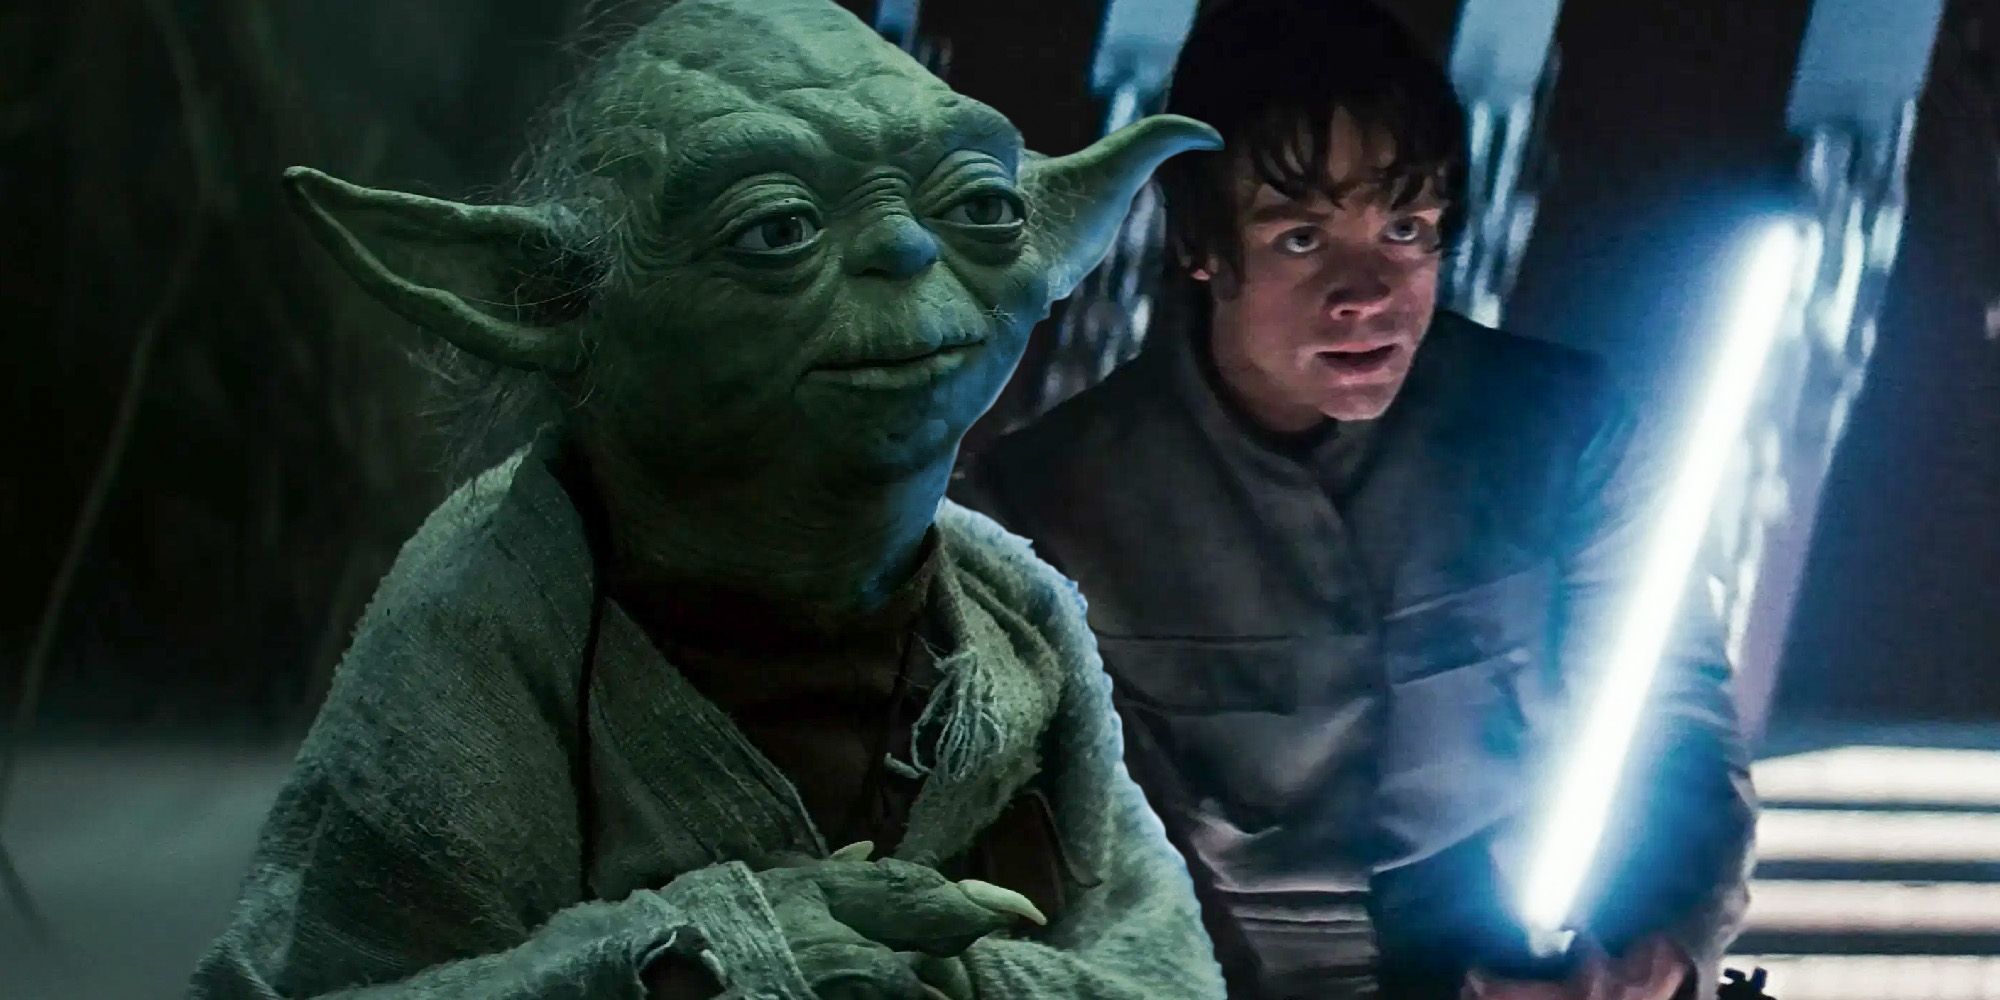 Yoda Luke Skywalker Star Wars the Empire strikes back